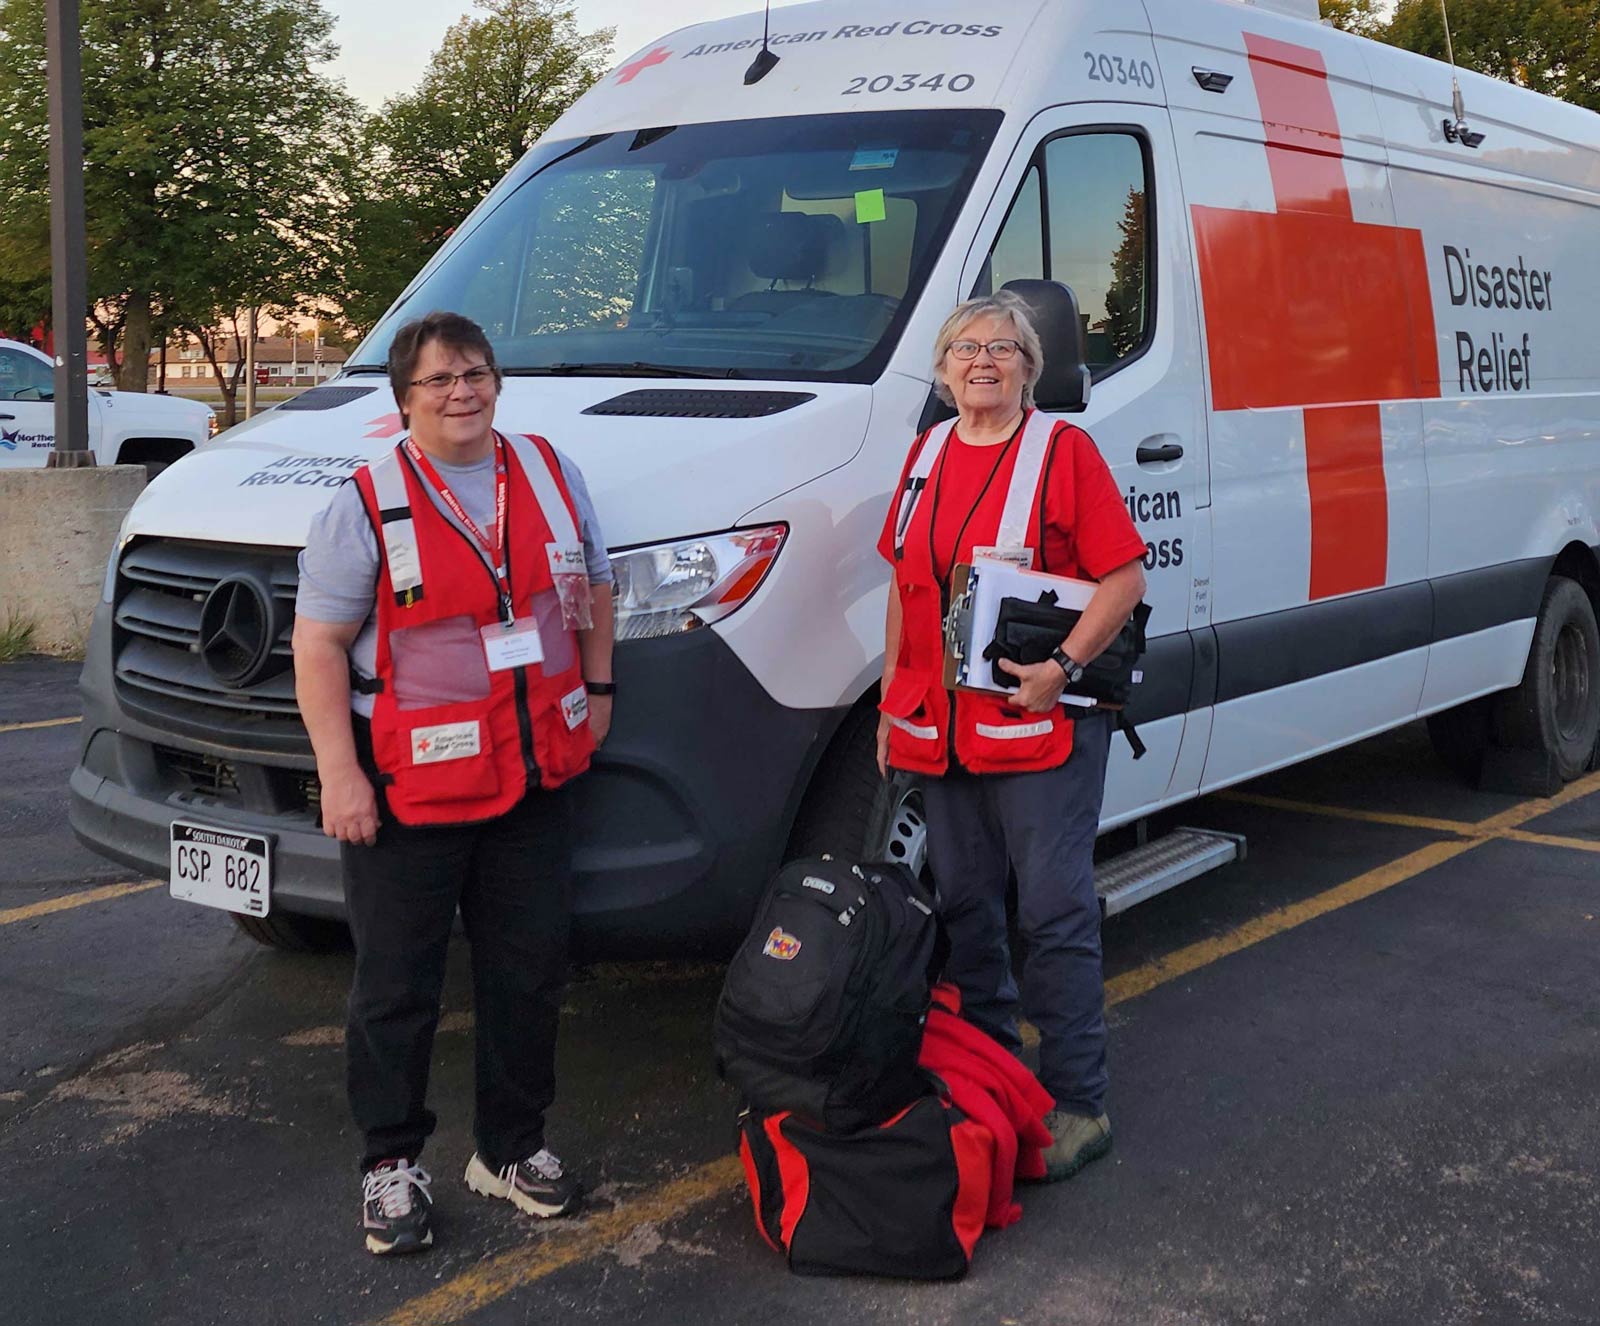 Marilee Thomas and her fellow Red Cross volunteer